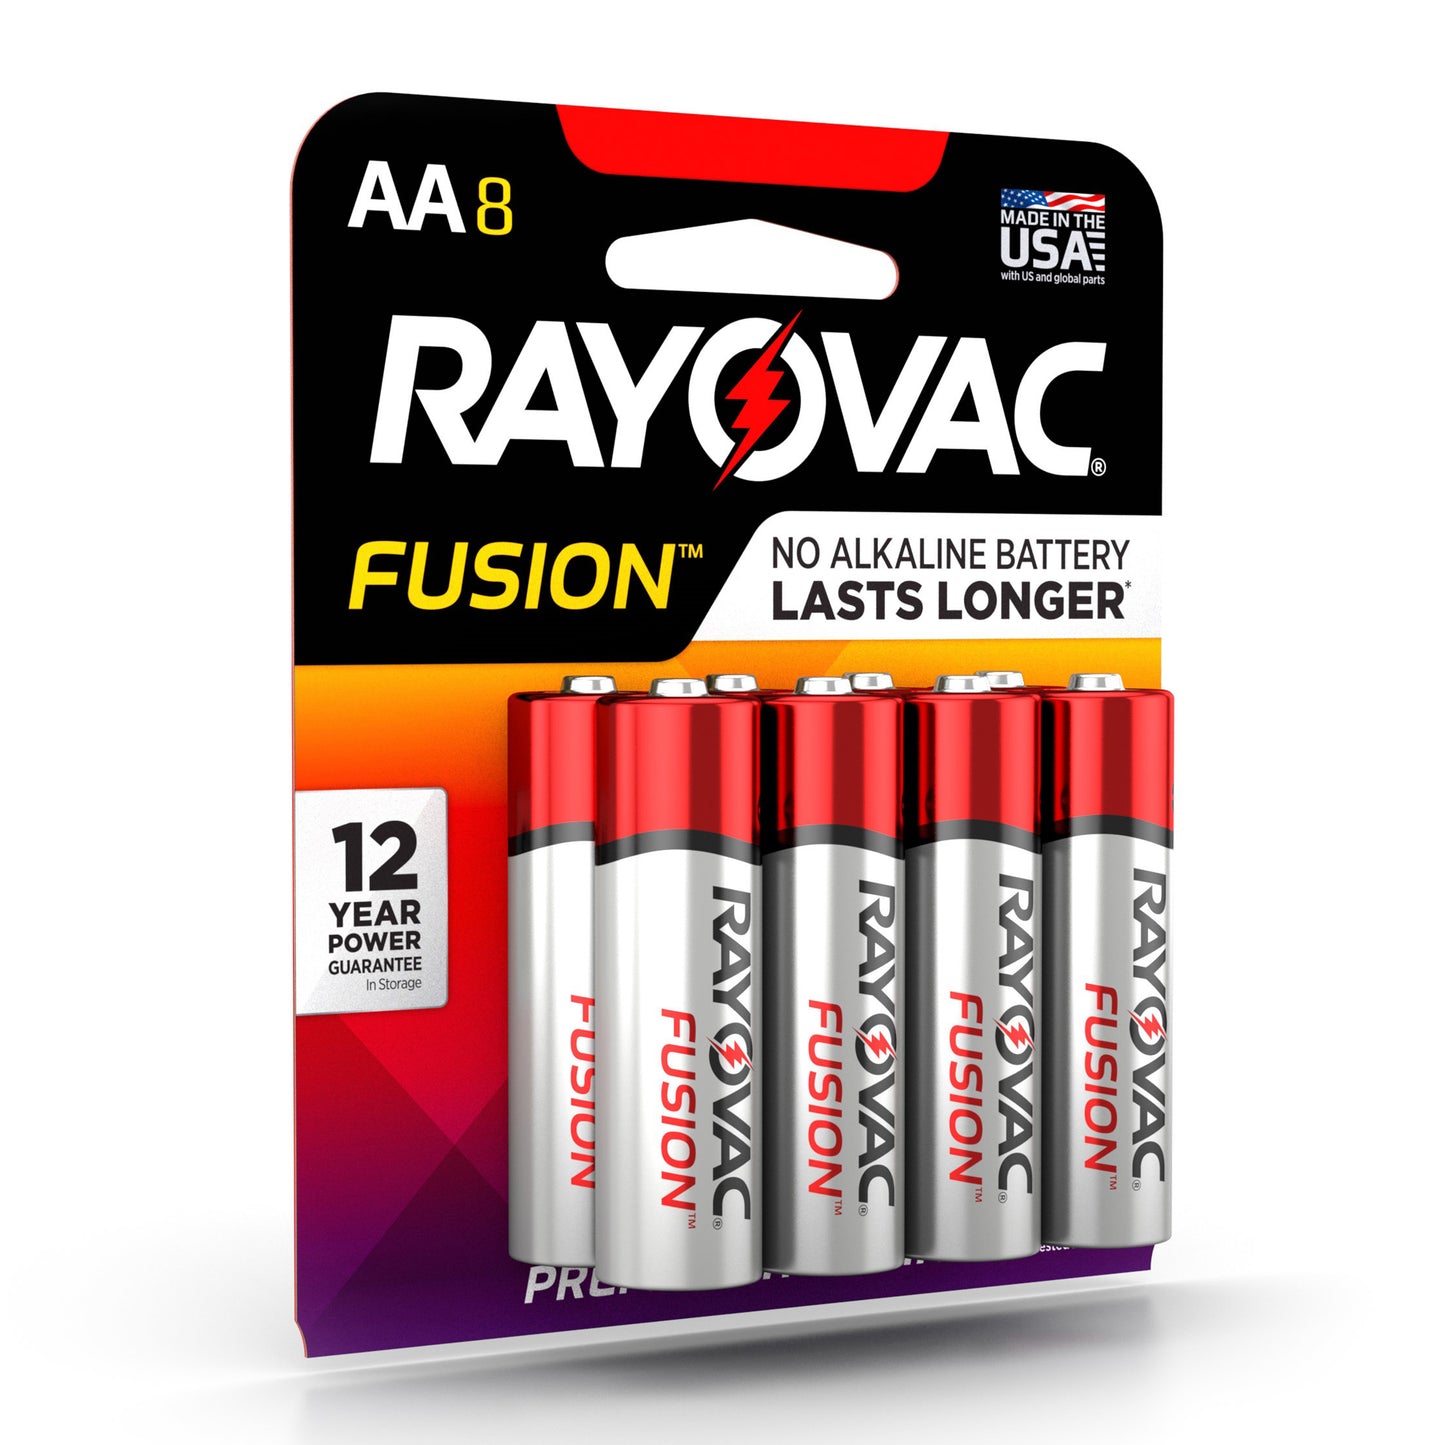 RAYOVAC AA 8-Pack Fusion Premium Alkaline Batteries